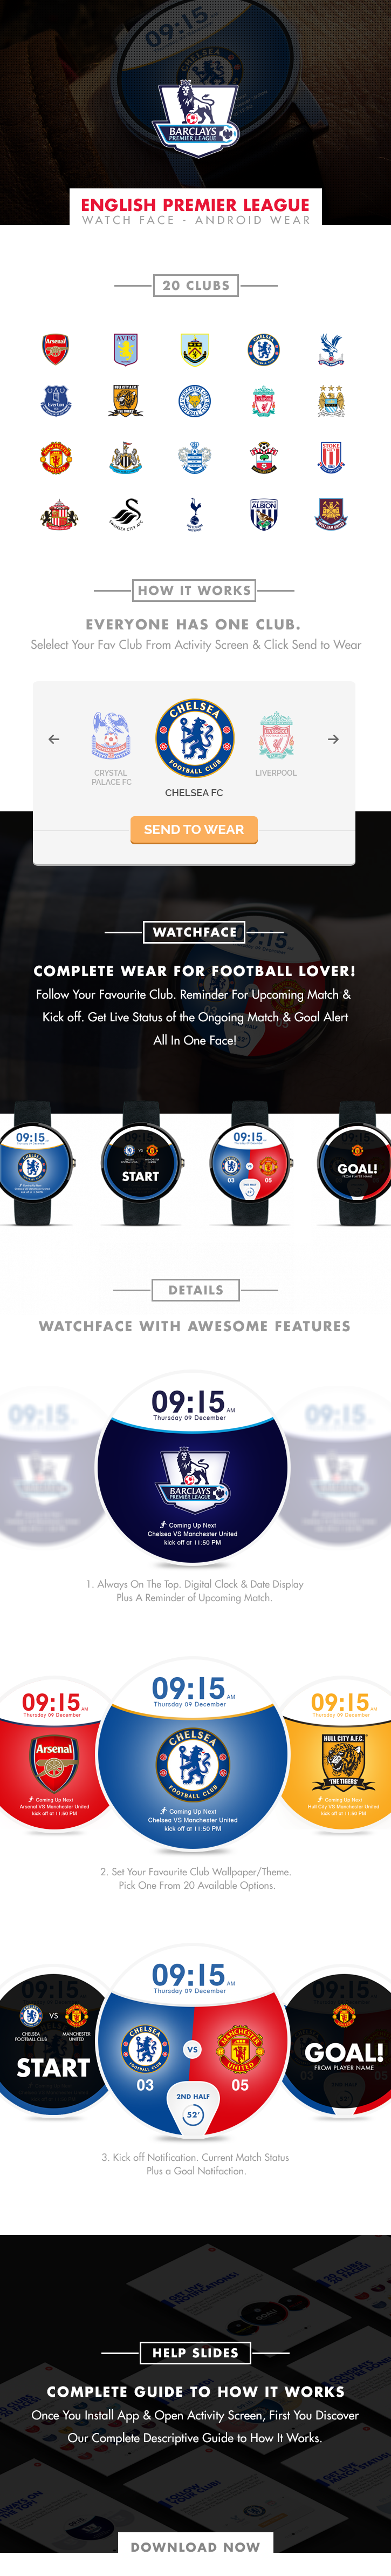 Android Wear wear watch watchface football English Premier league digital watchface presentation wear app app clubs digital digital clock design notification